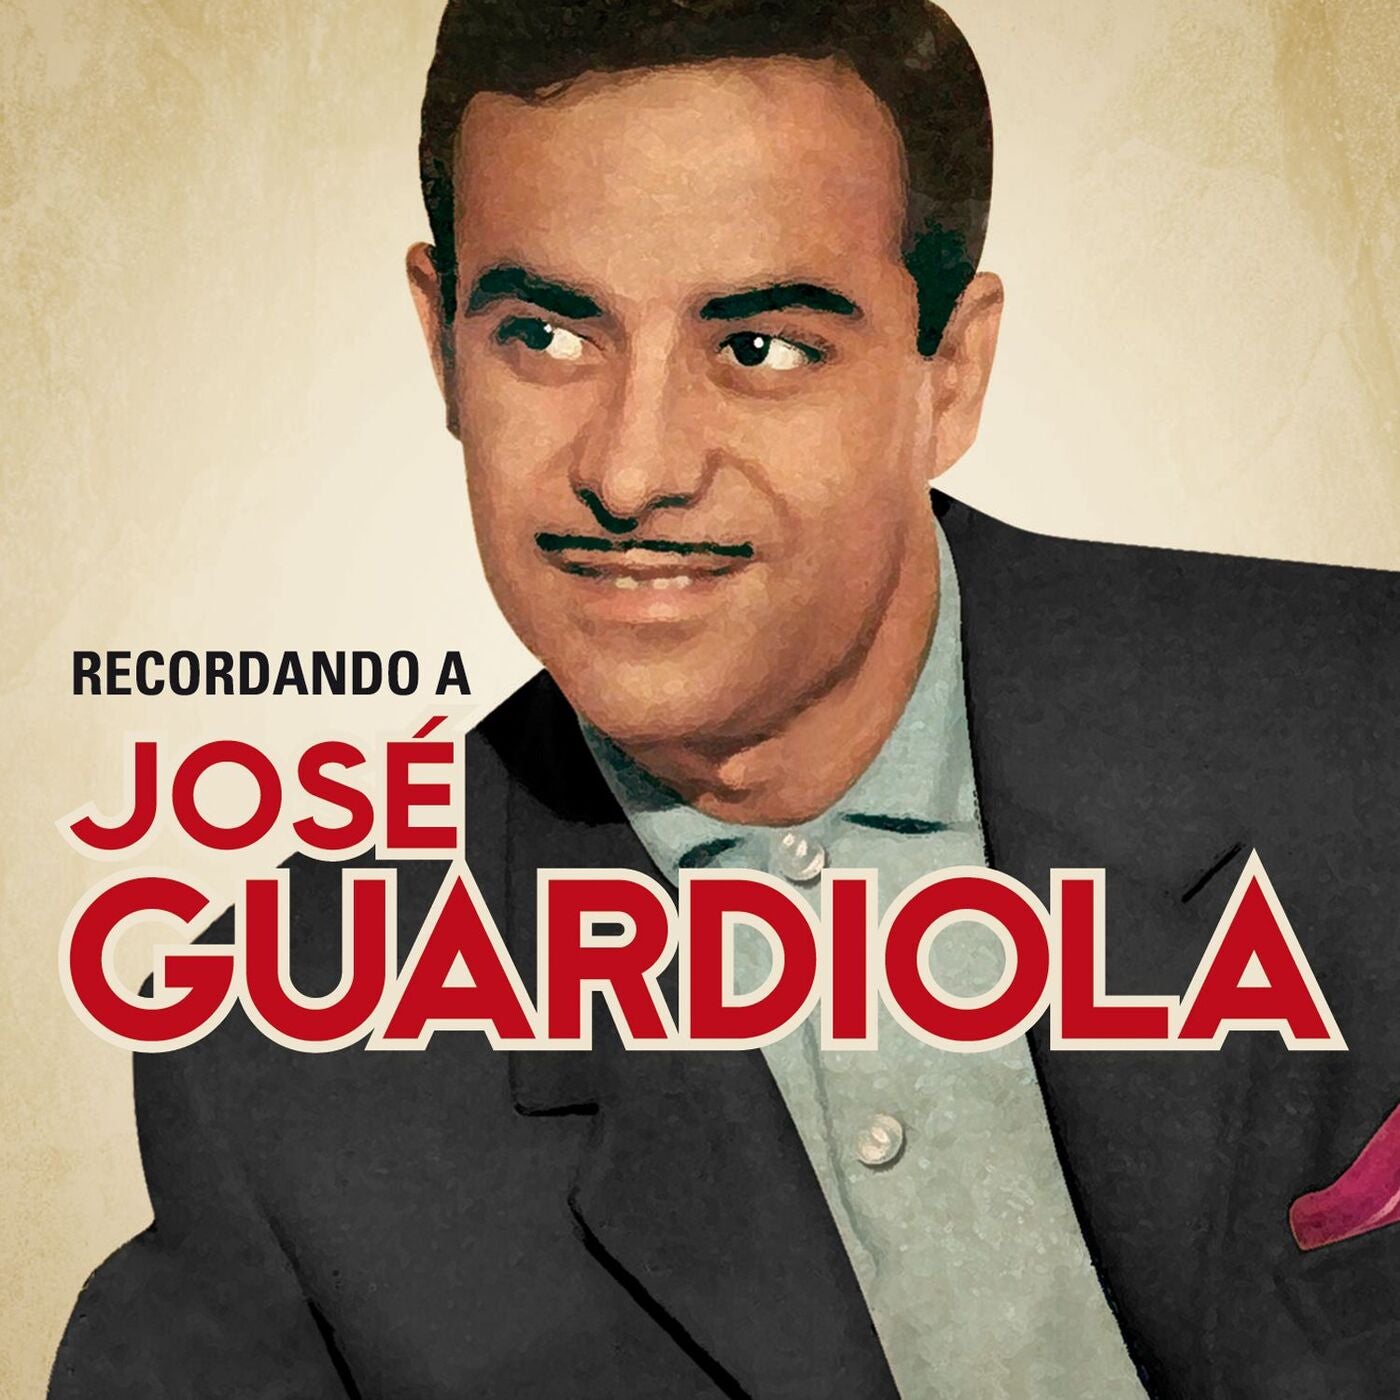 Recordando a José Guardiola by Jose Guardiola on Beatsource